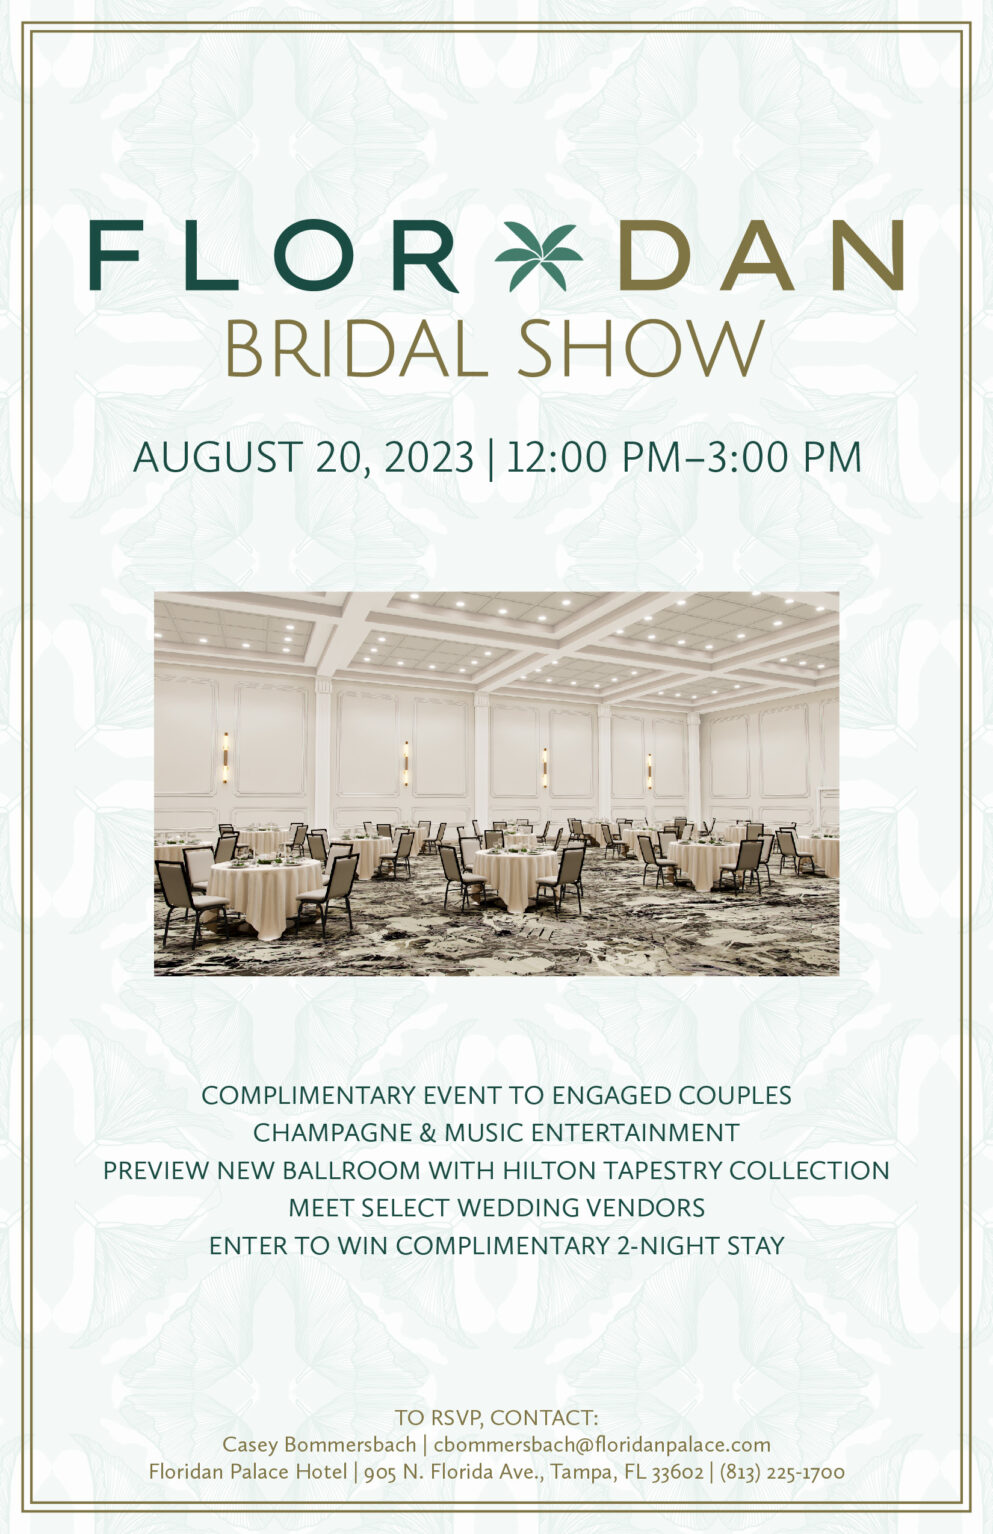 Floridan Palace Tampa Bridal Show 2023